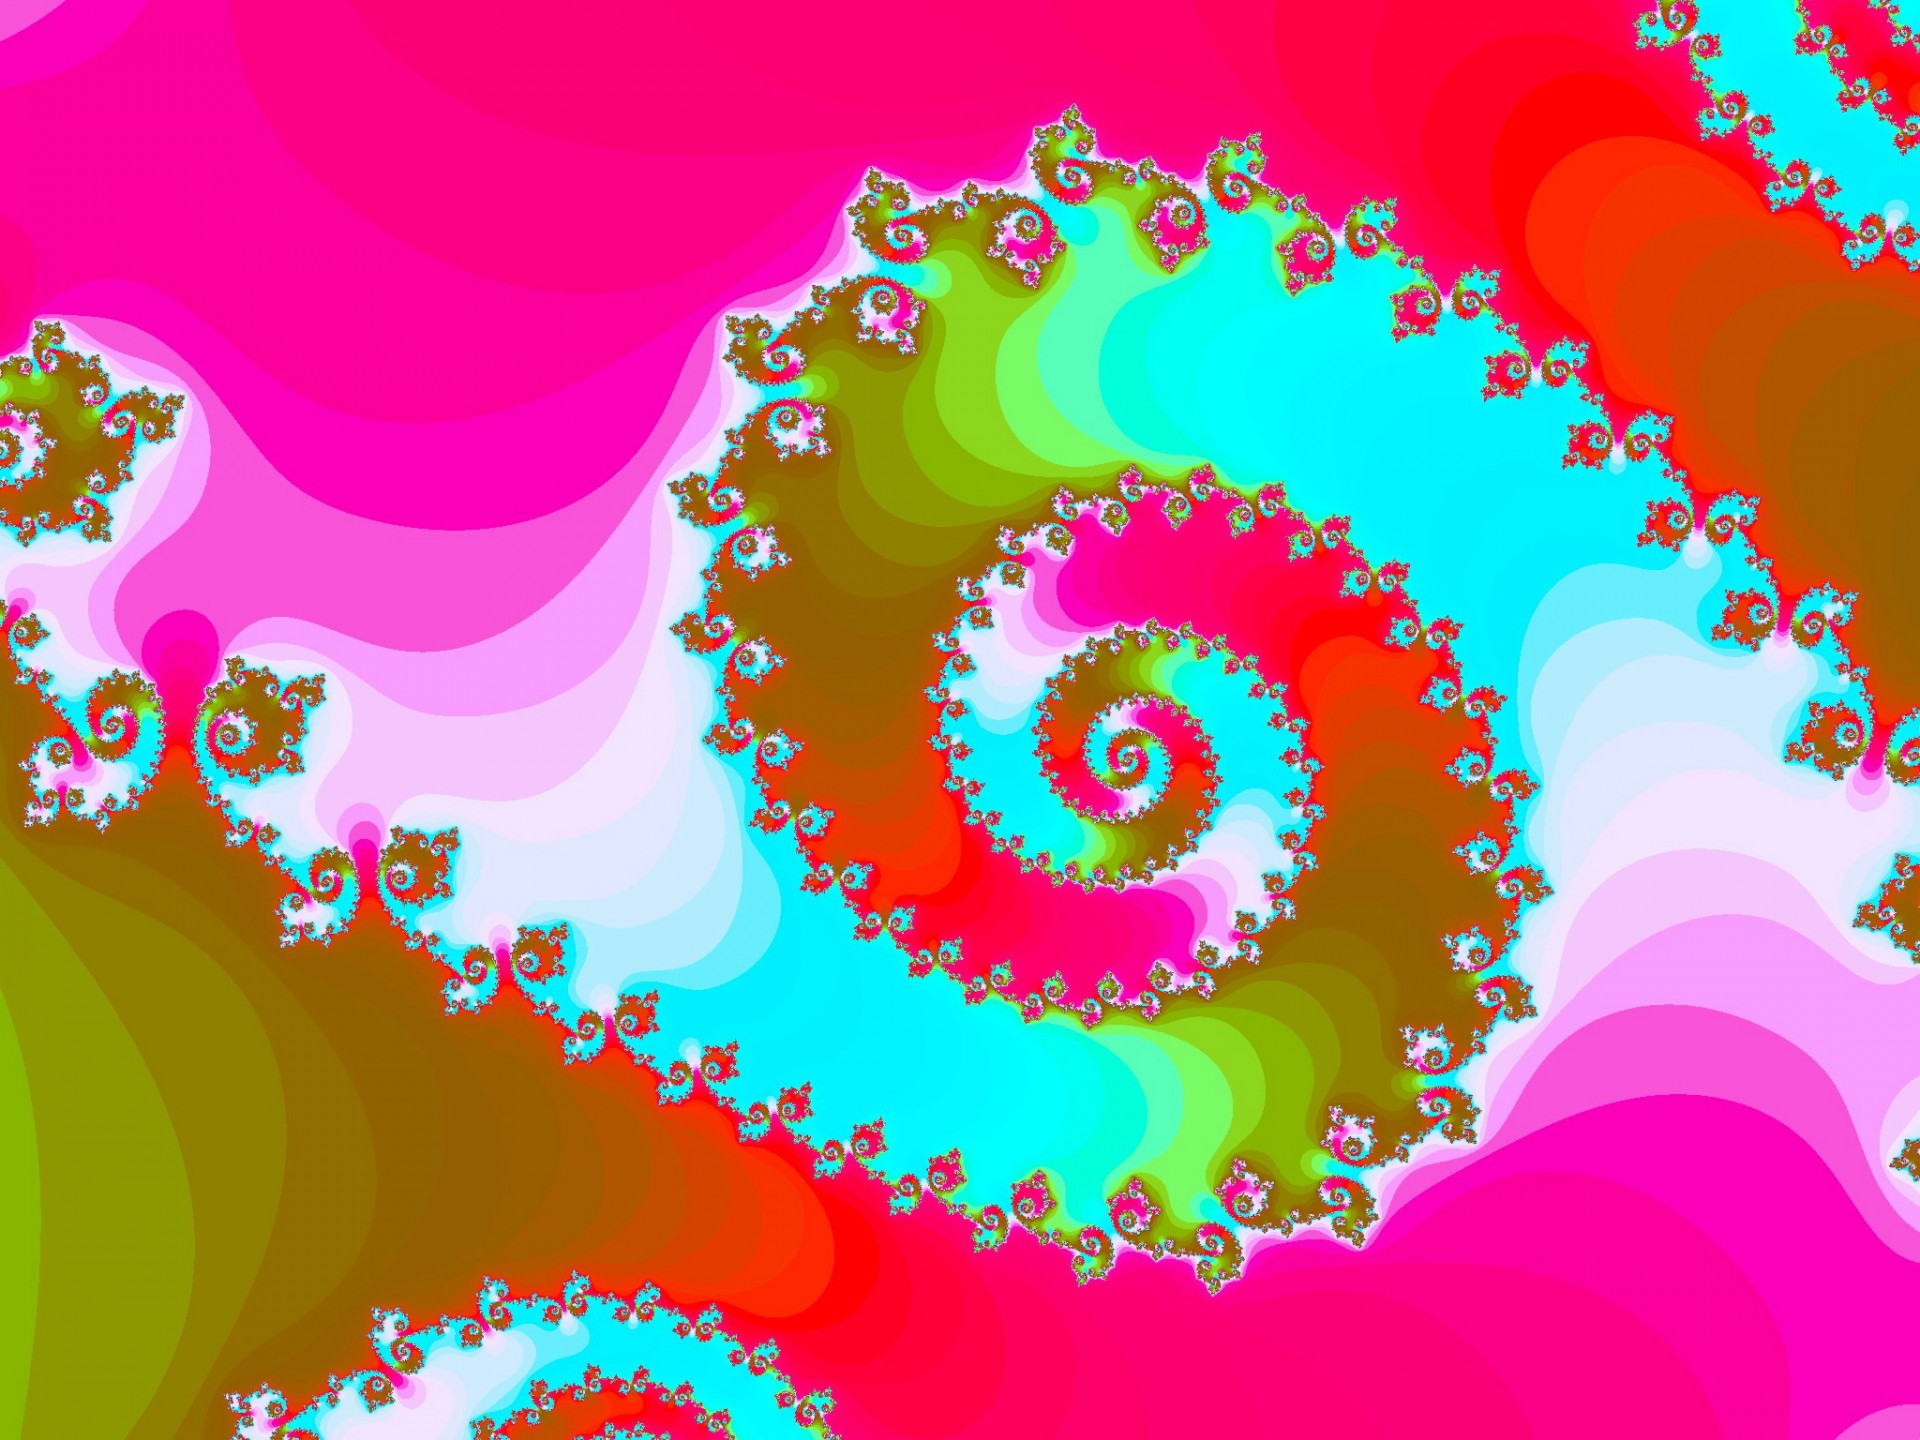 Abstraction Fractal Spiral